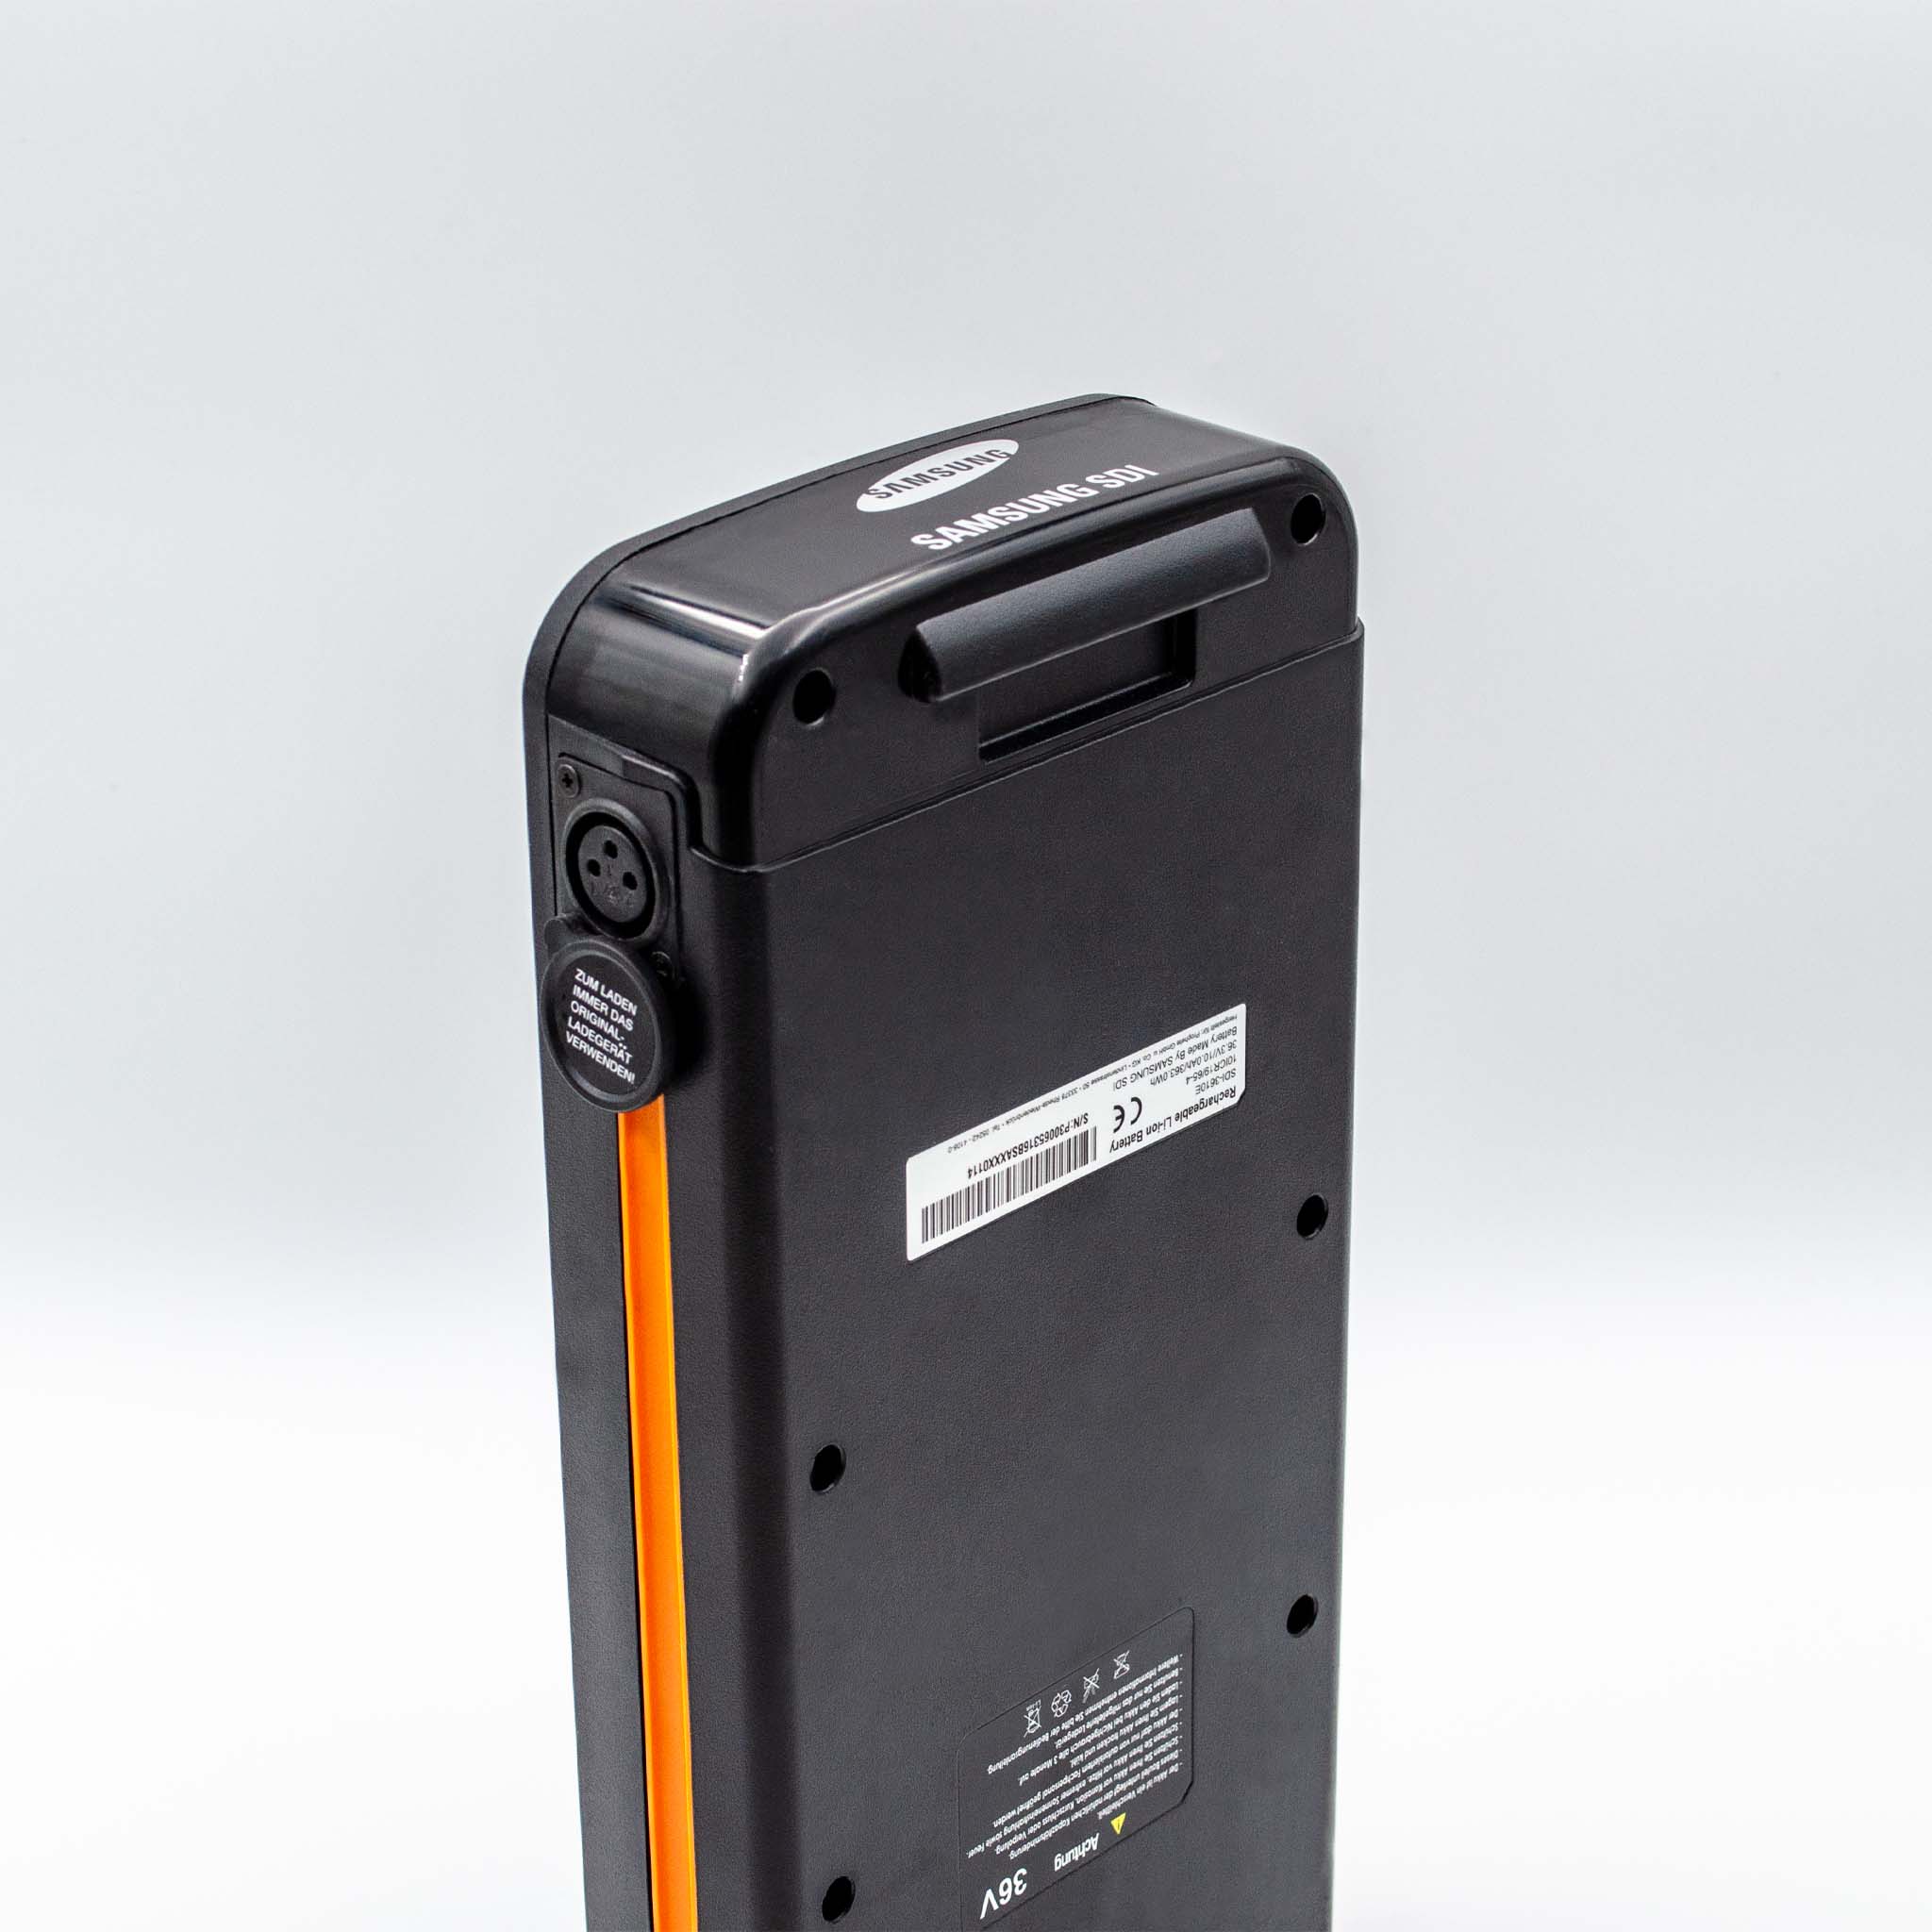 Samsung SDI batteri til Aldi elcykel